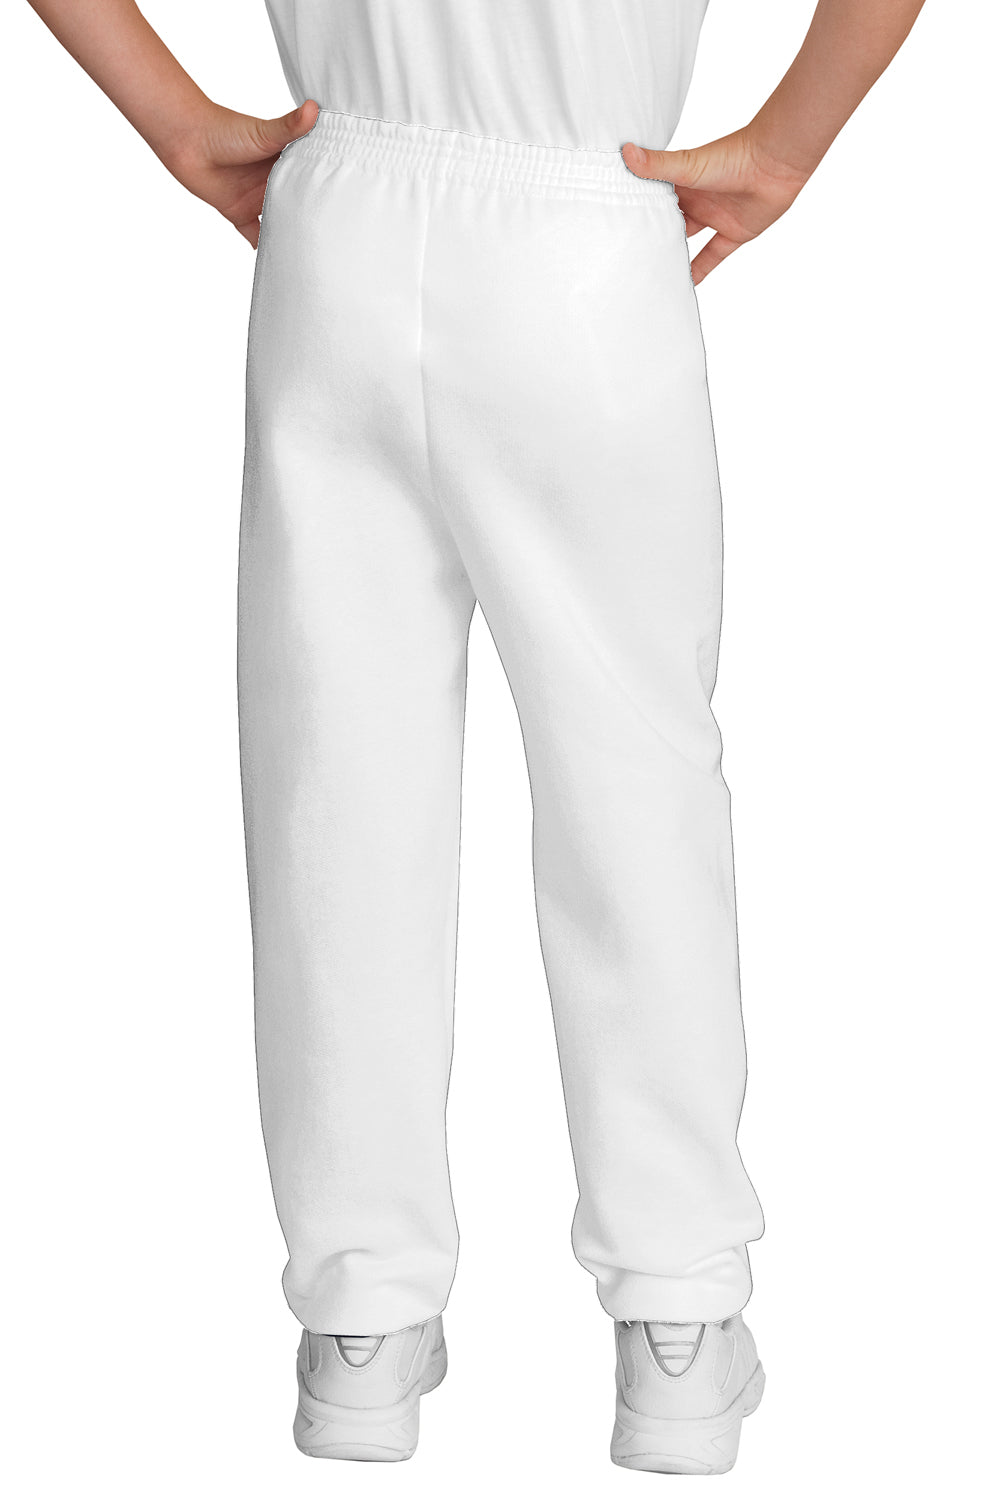 Port & Company PC90YP Core Fleece Sweatpants White Back